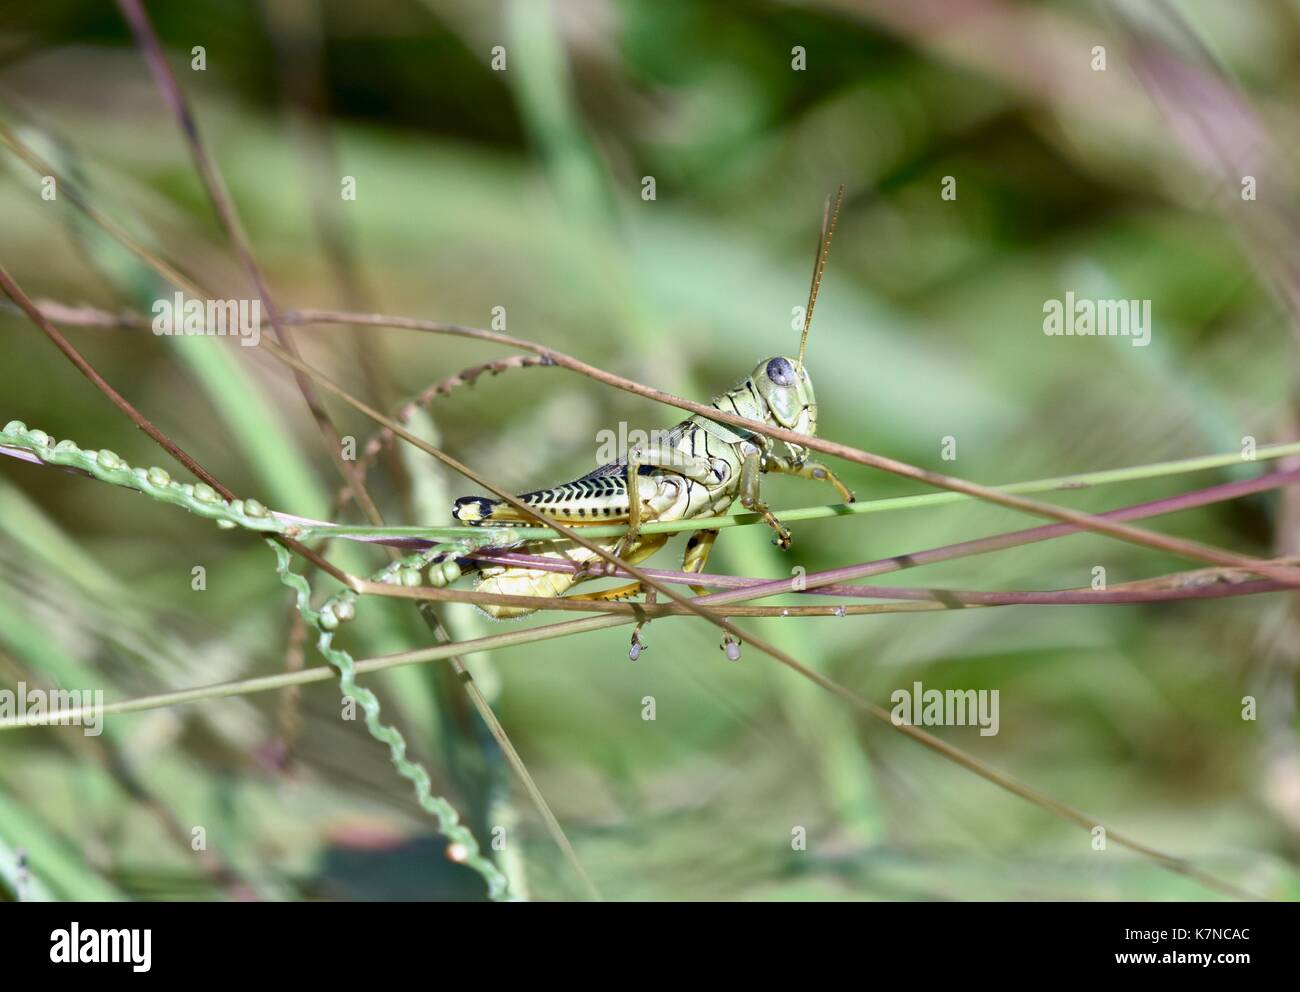 Grasshopper (Caelifera) on a blade of grass Stock Photo